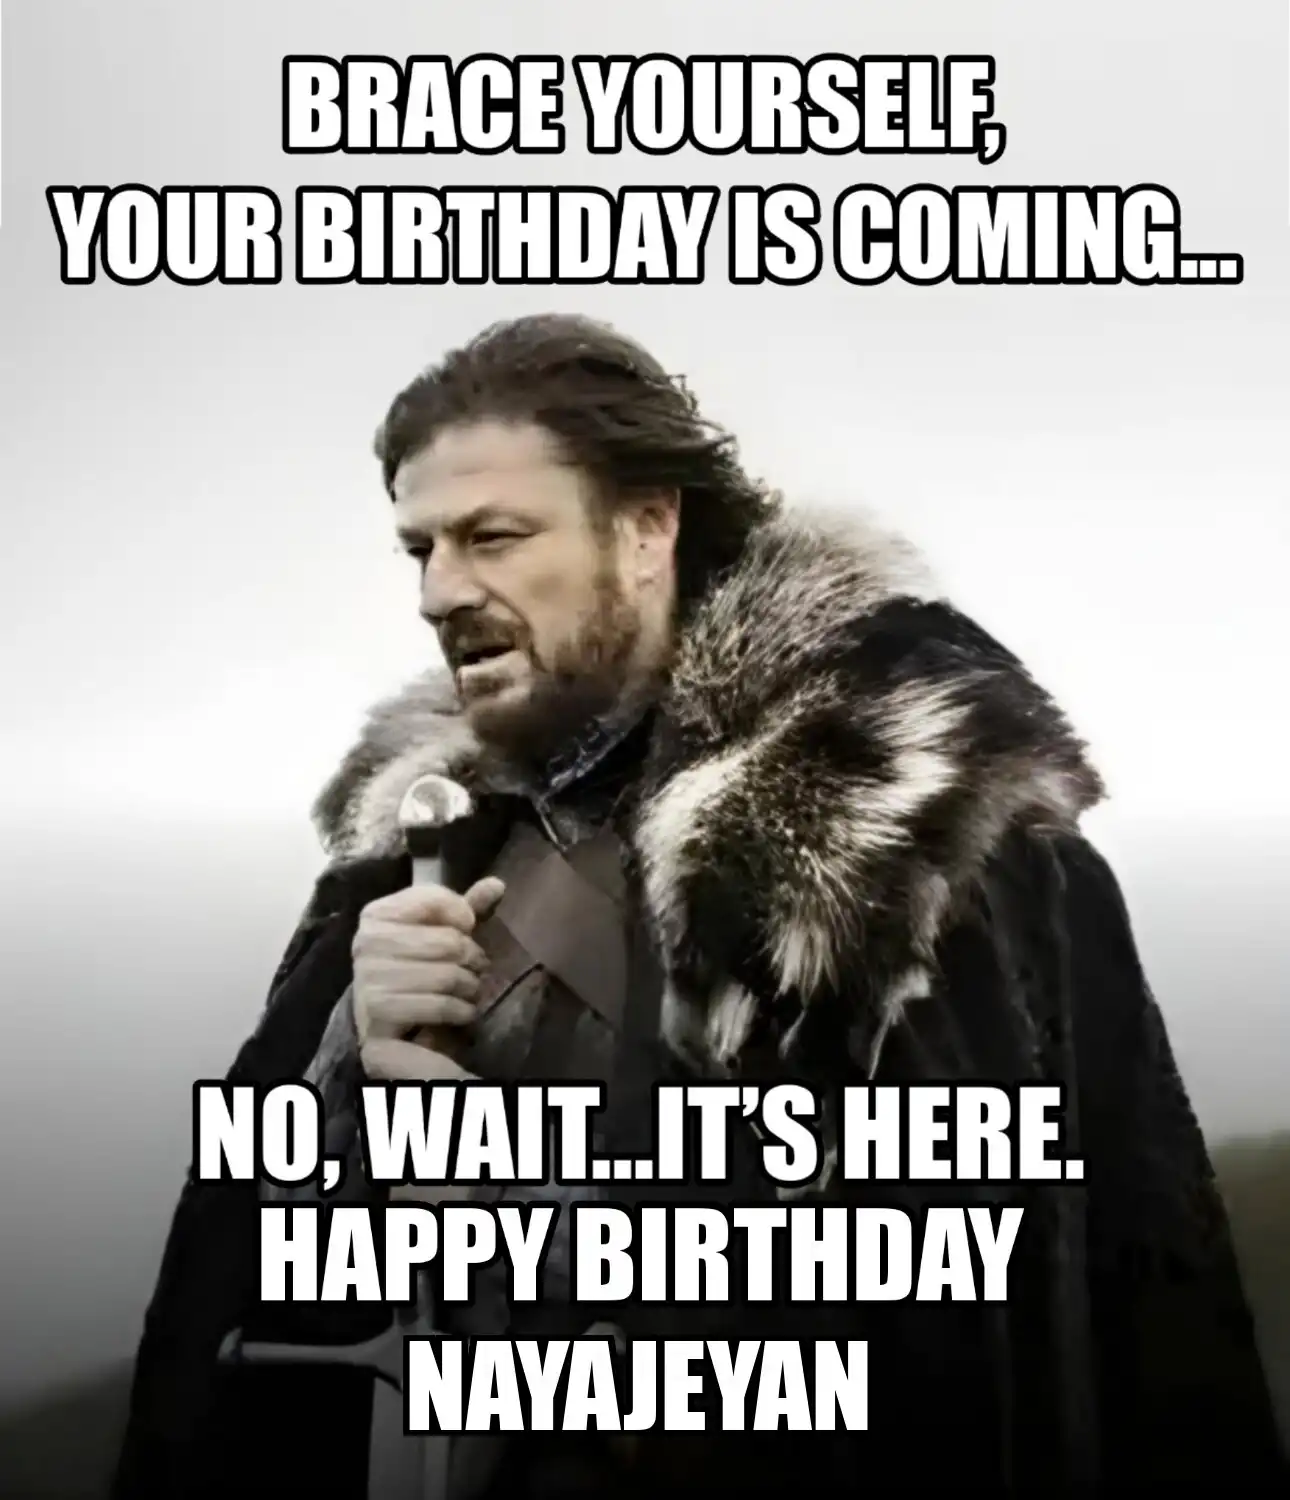 Happy Birthday Nayajeyan Brace Yourself Your Birthday Is Coming Meme